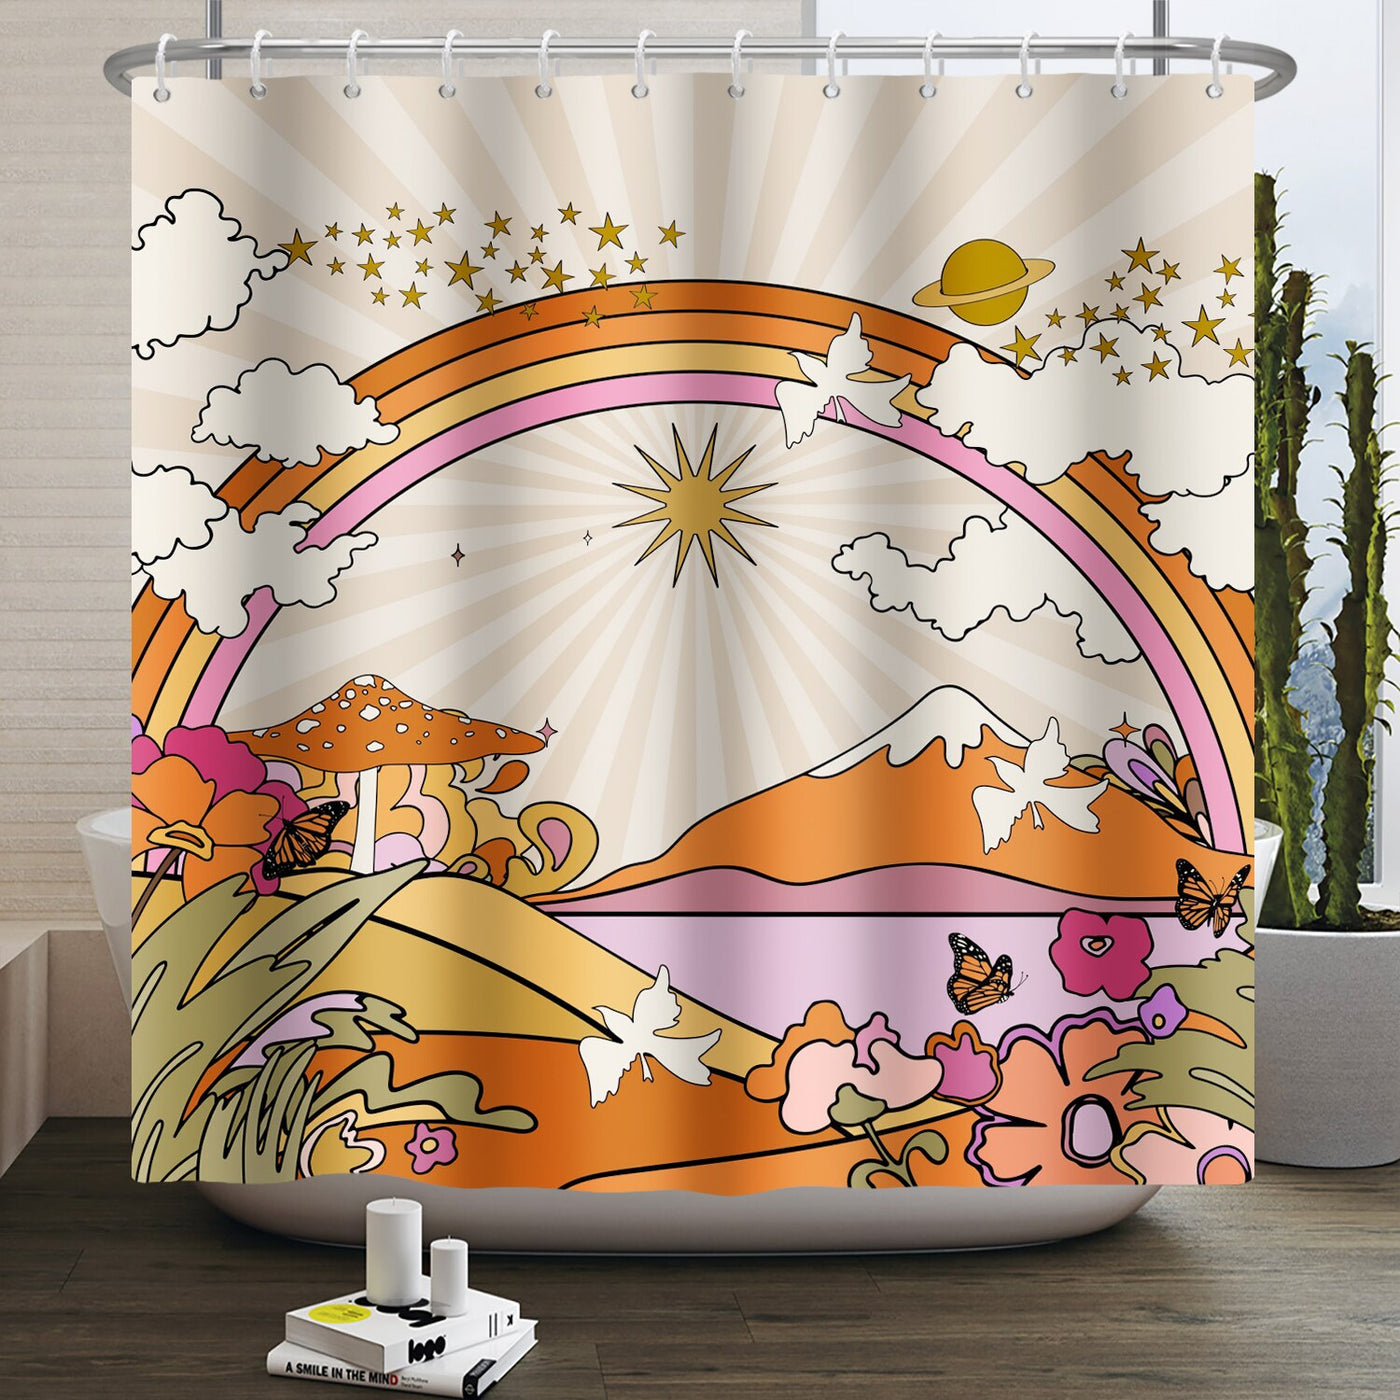 Retro Shower Curtain - HuxoHome